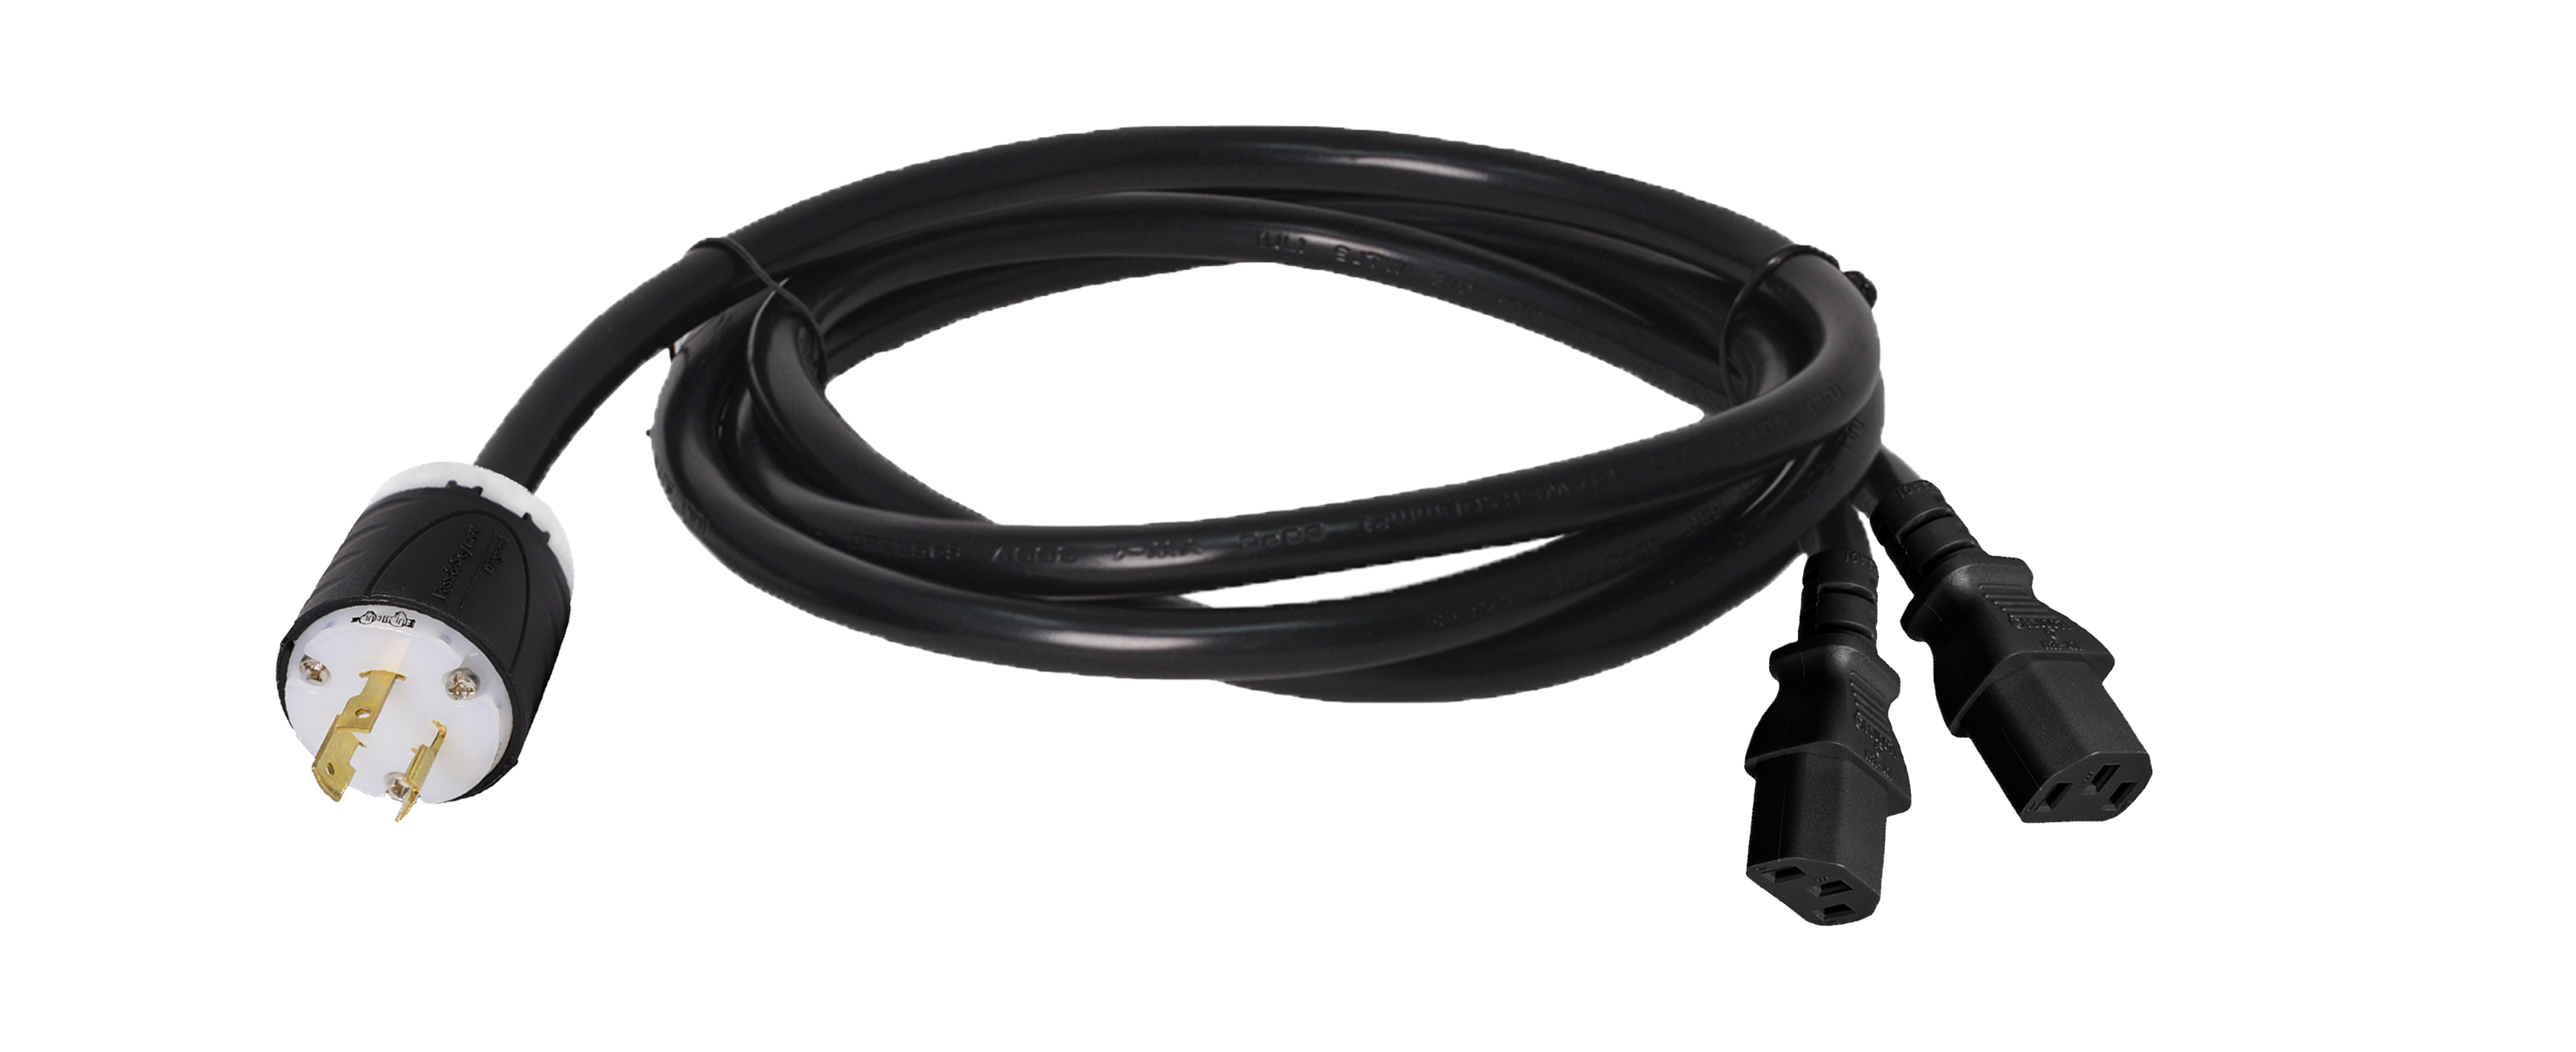 splitter power cord, l6-20 c13